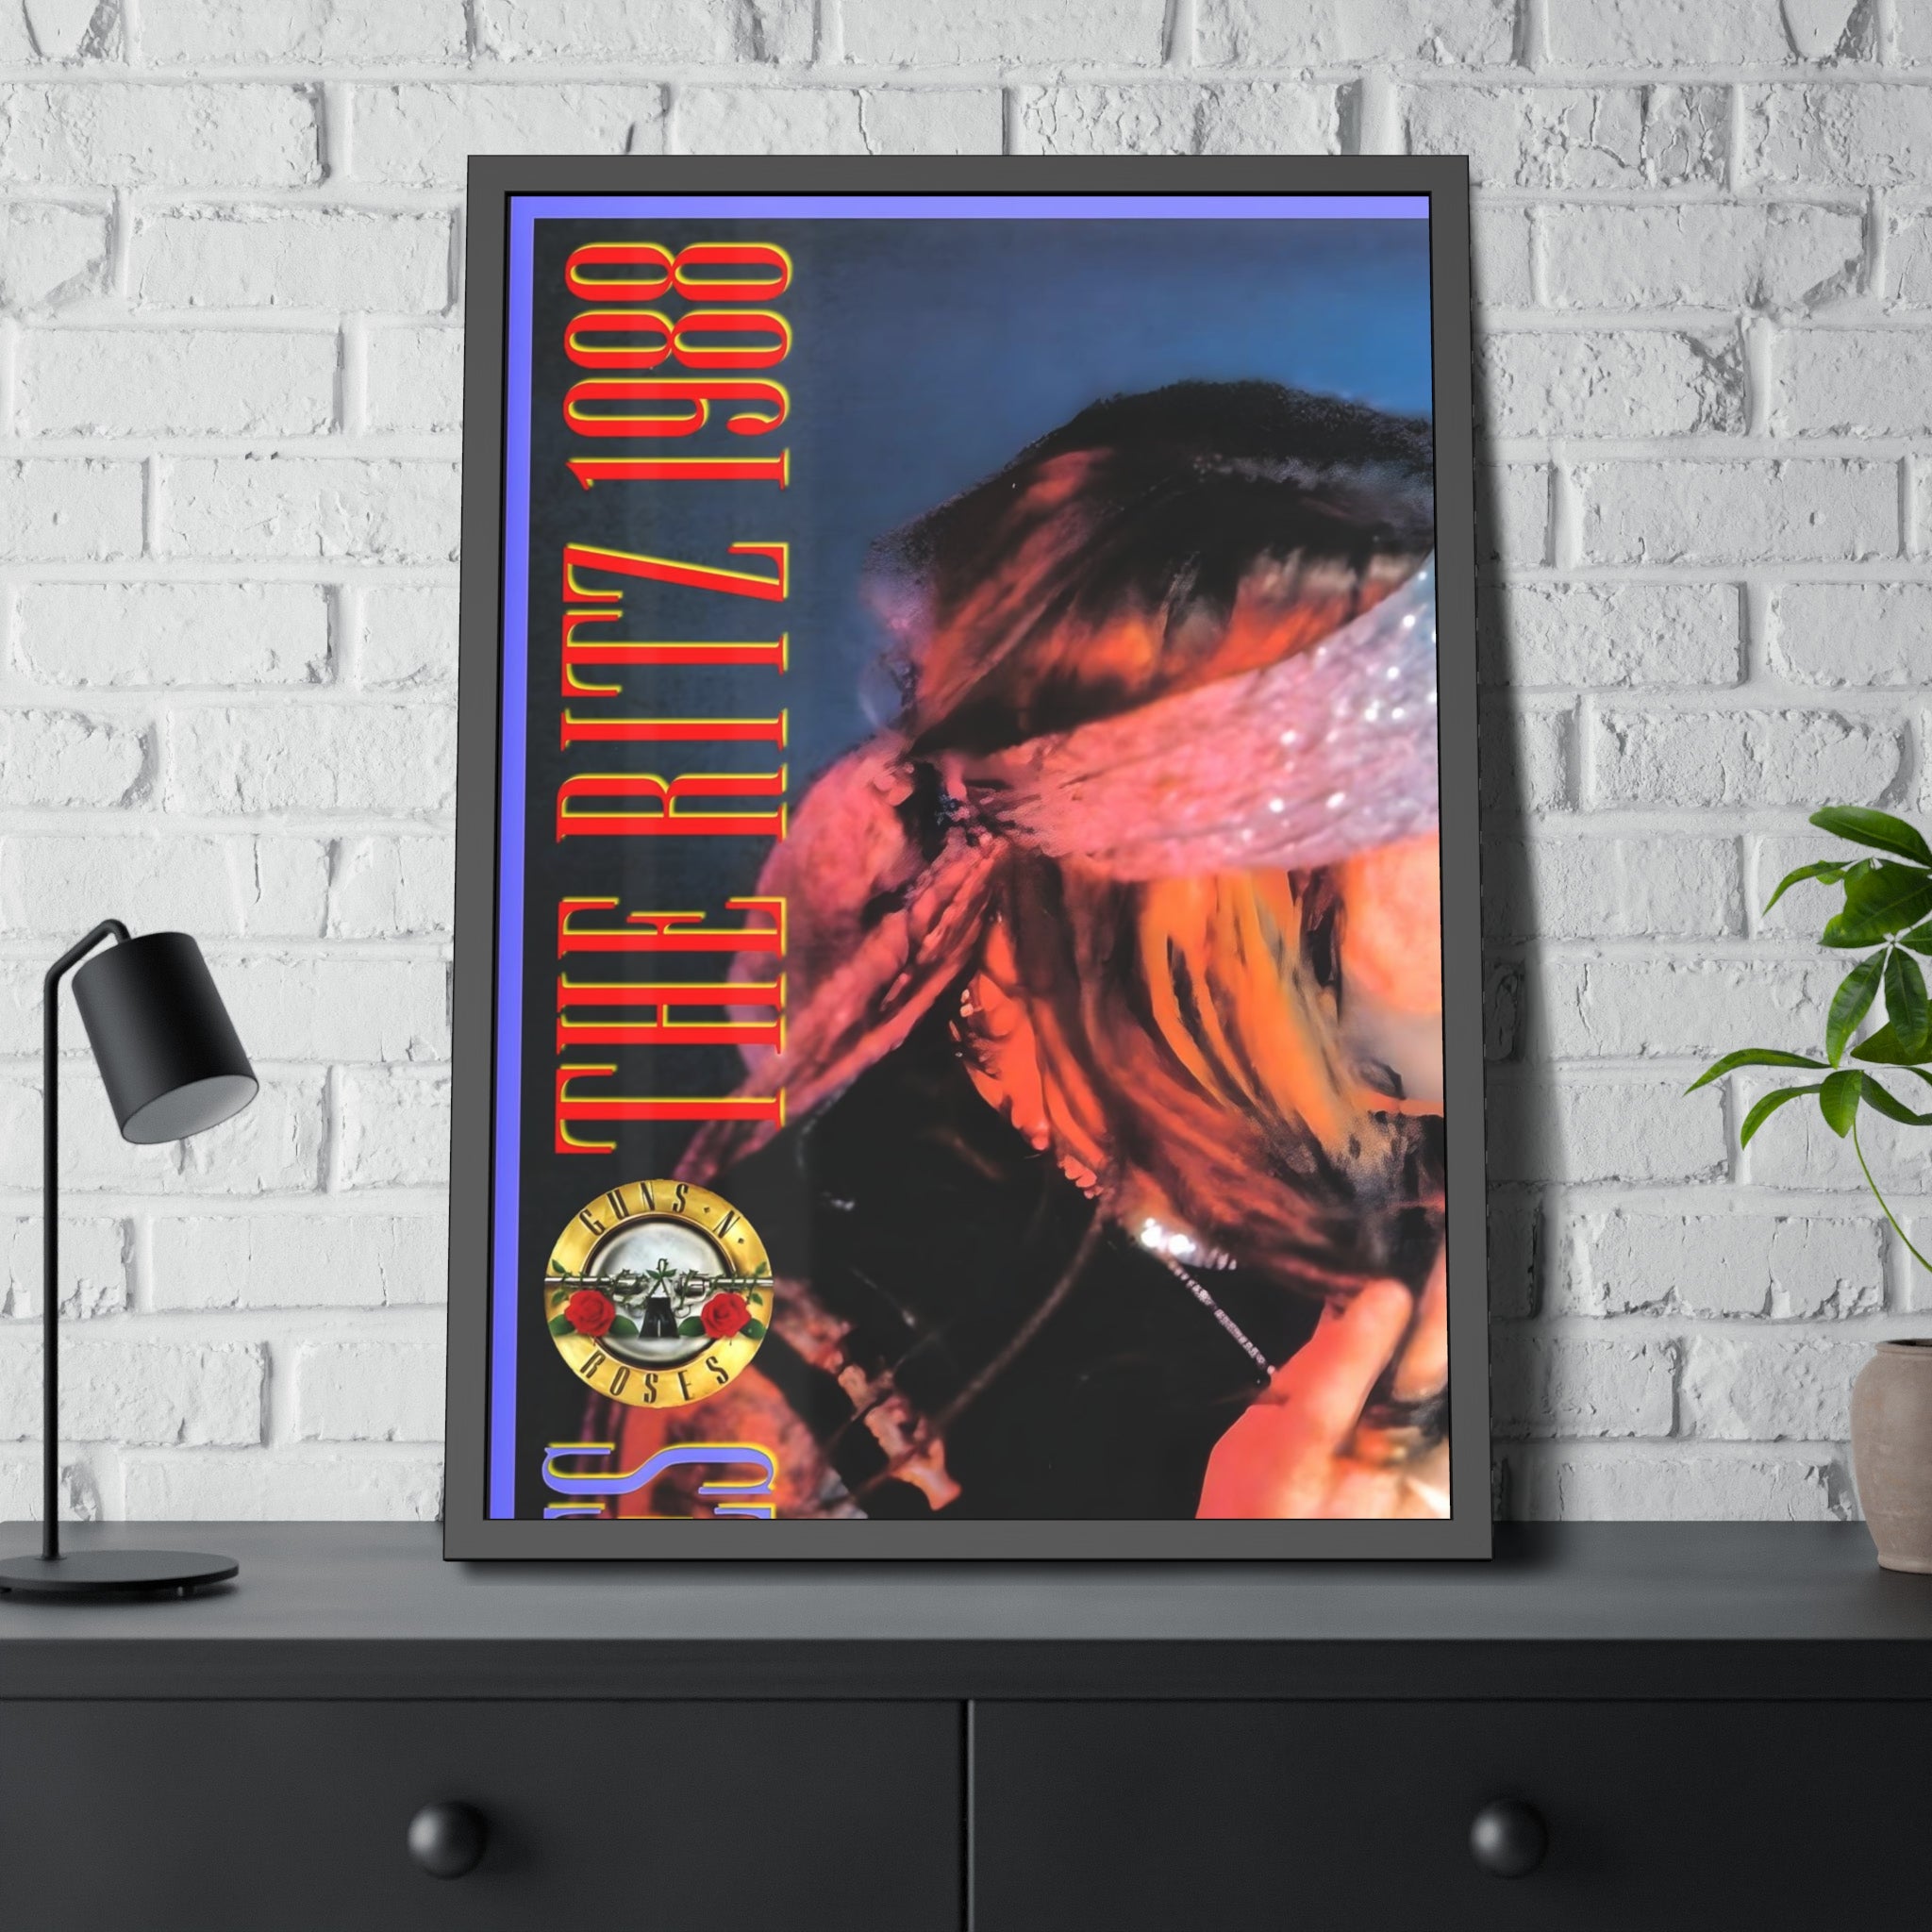 Guns N' Roses The Ritz 1988 Concert Poster